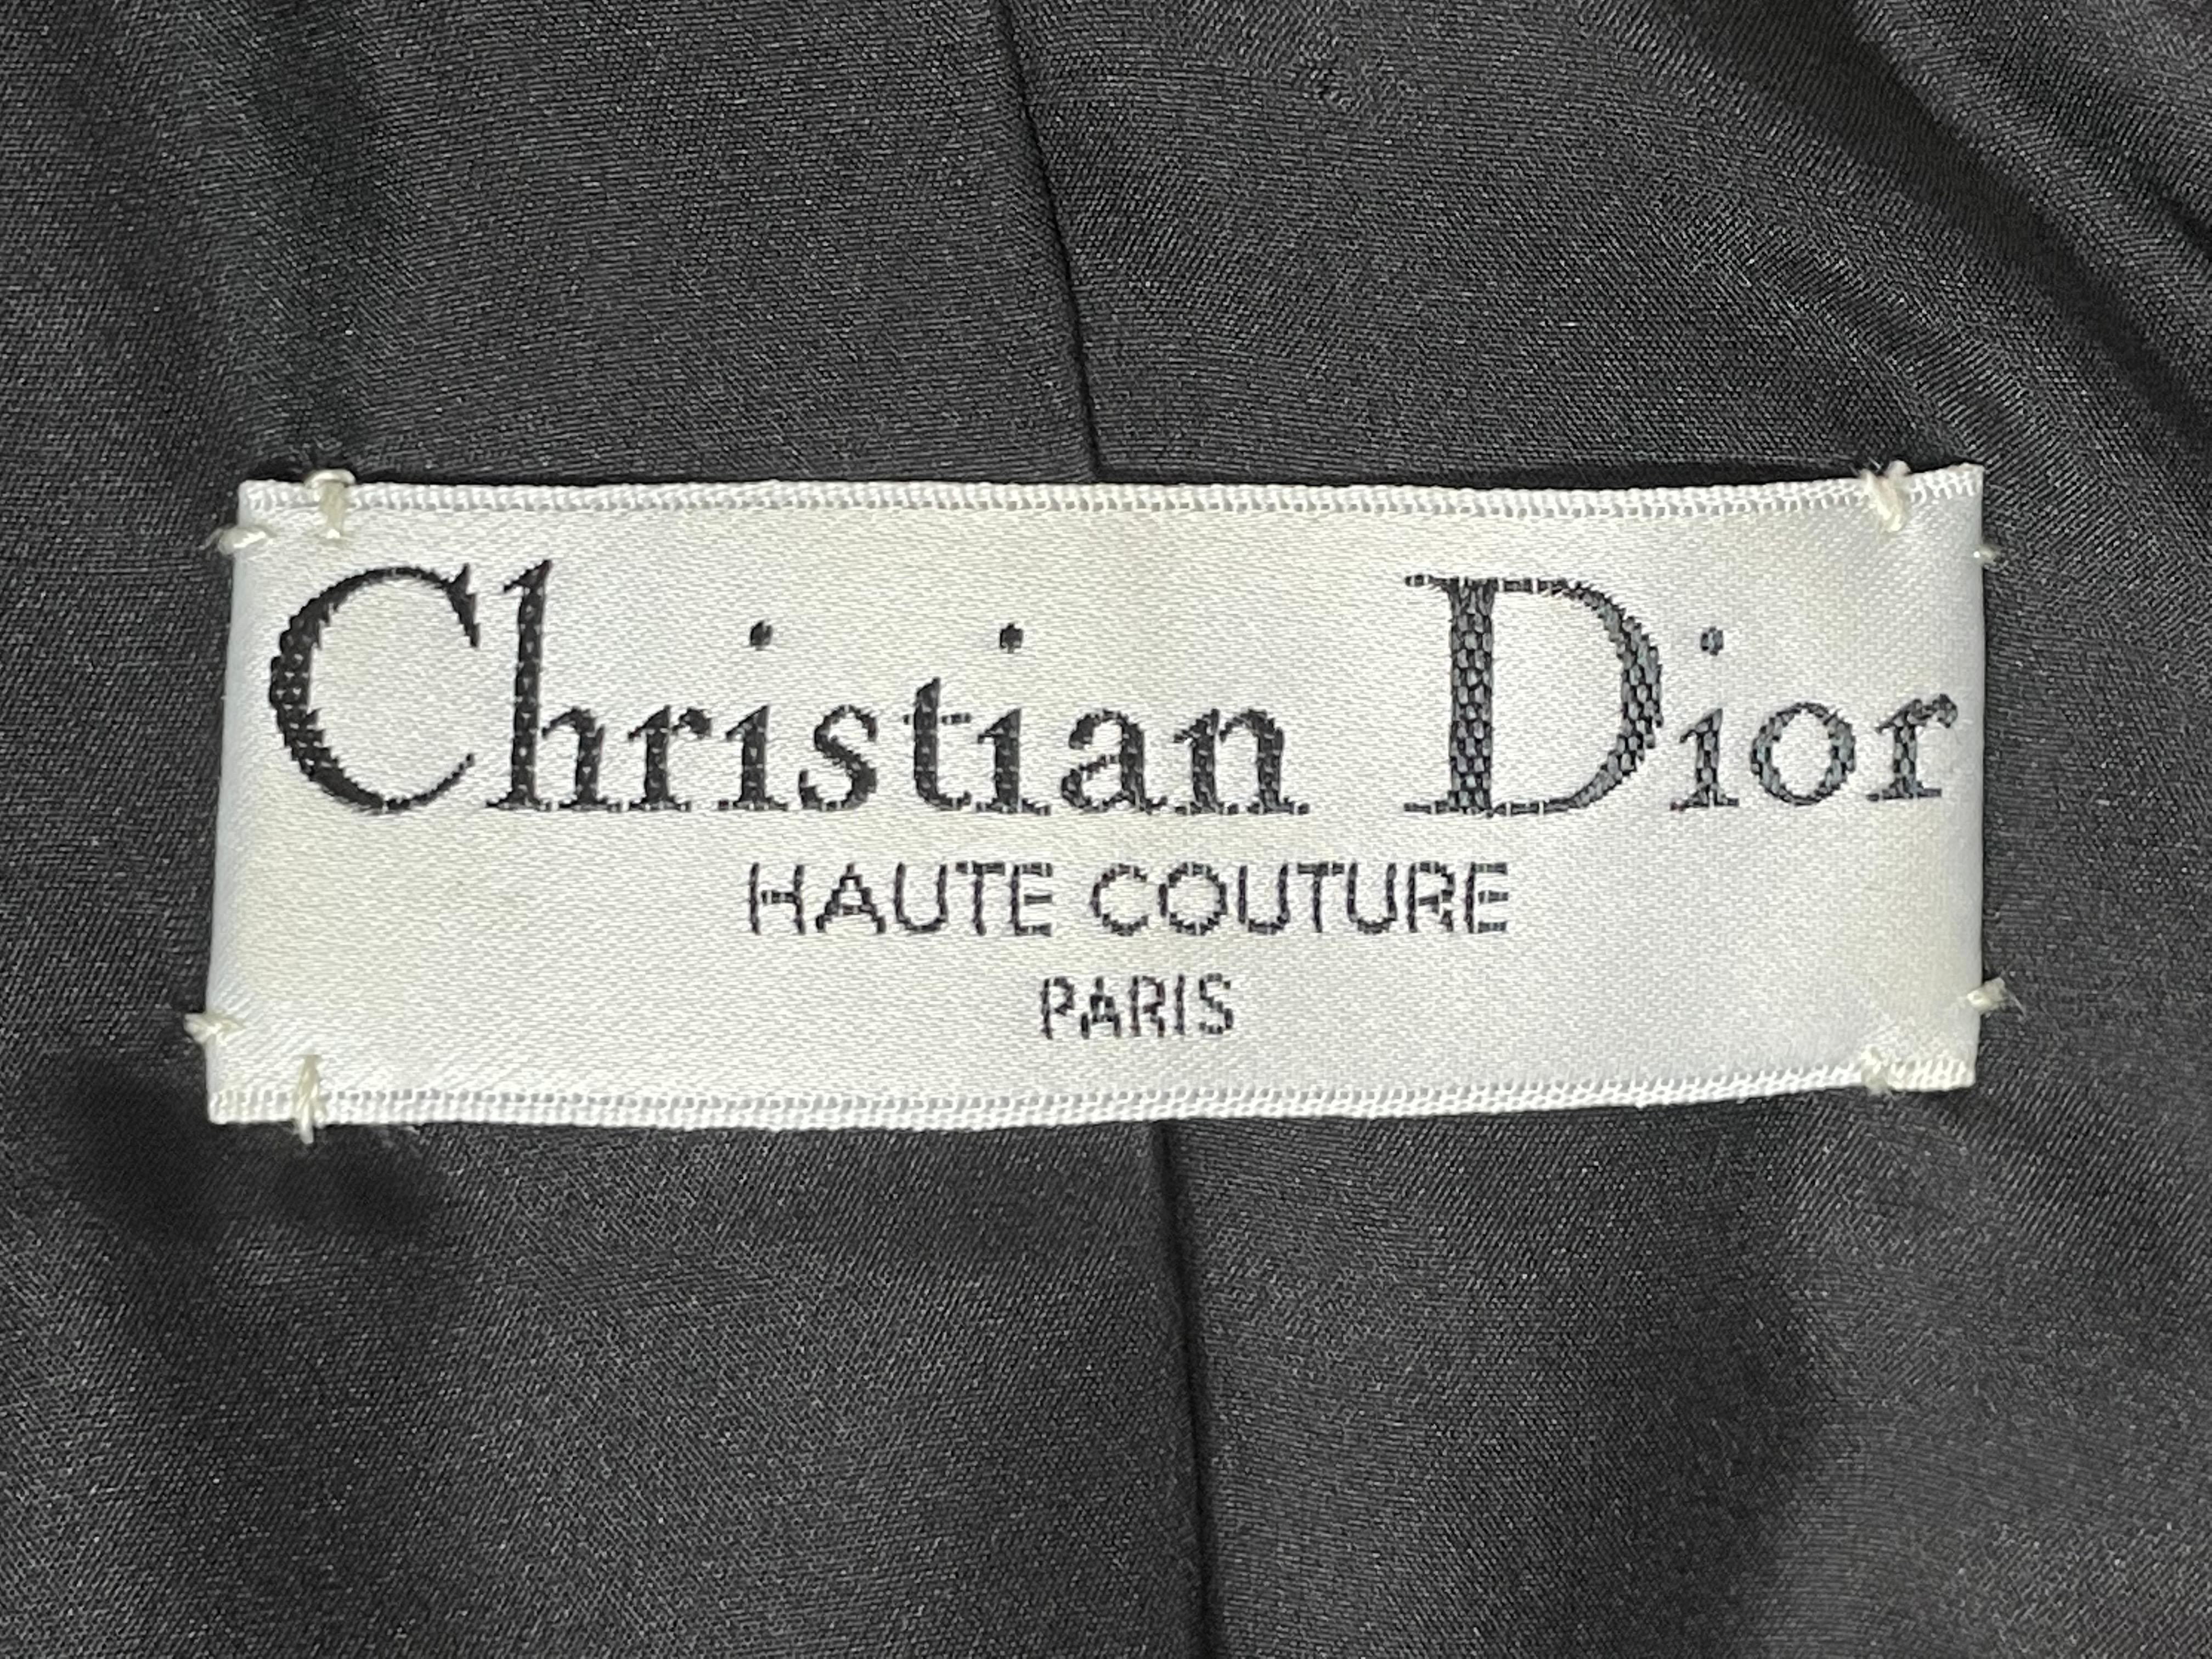 S/S 2005 Christian Dior by John Galliano Haute Couture Black Velvet Jacket 2